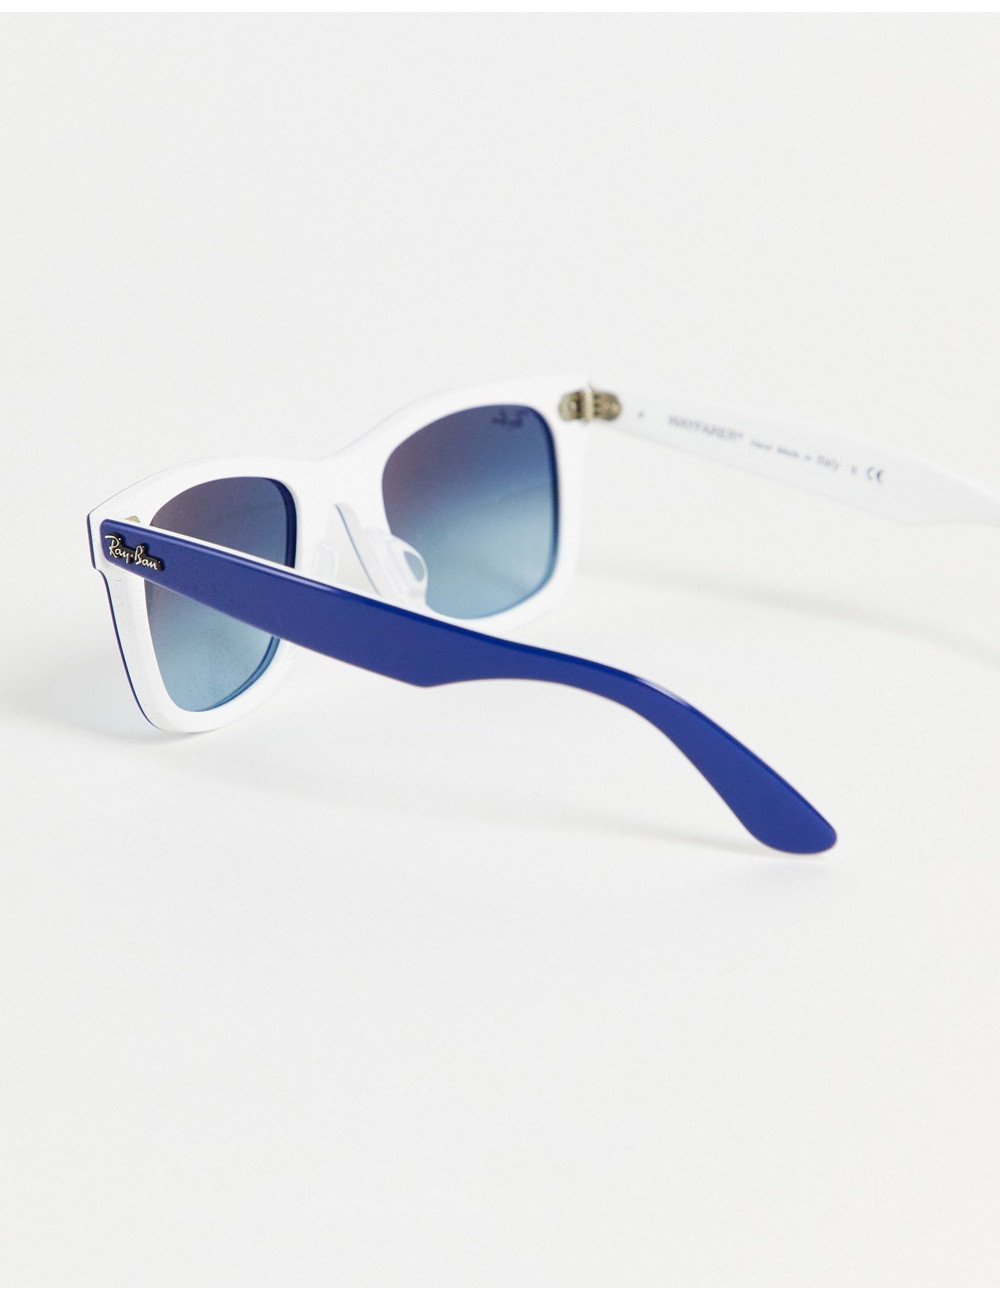 Rayban square lens sunglasses